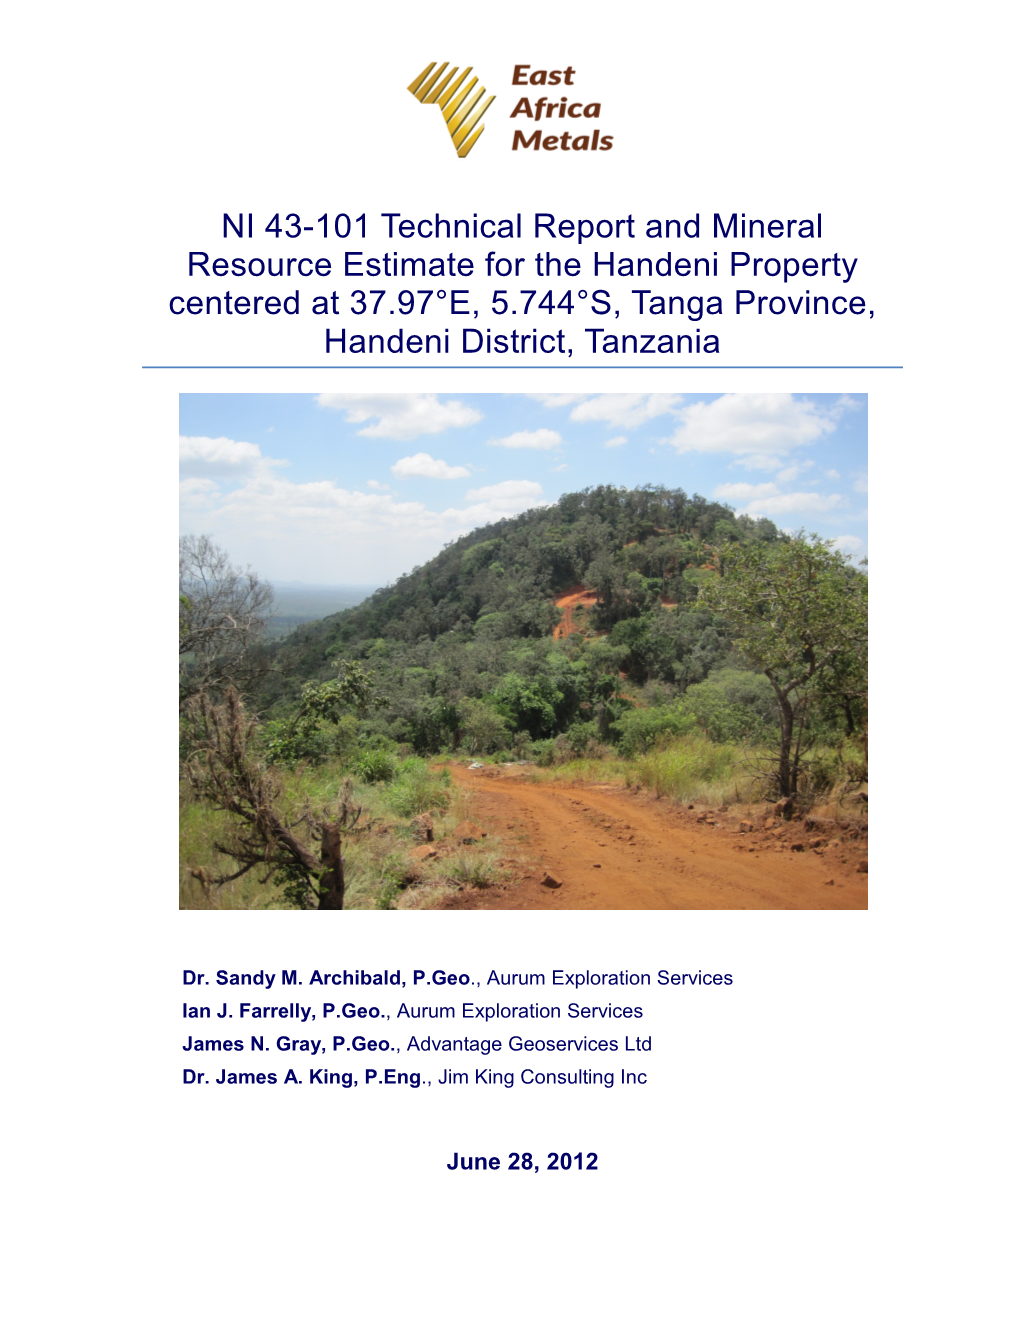 Handeni Project, June 28, 2012 – NI43-101 Technical Report